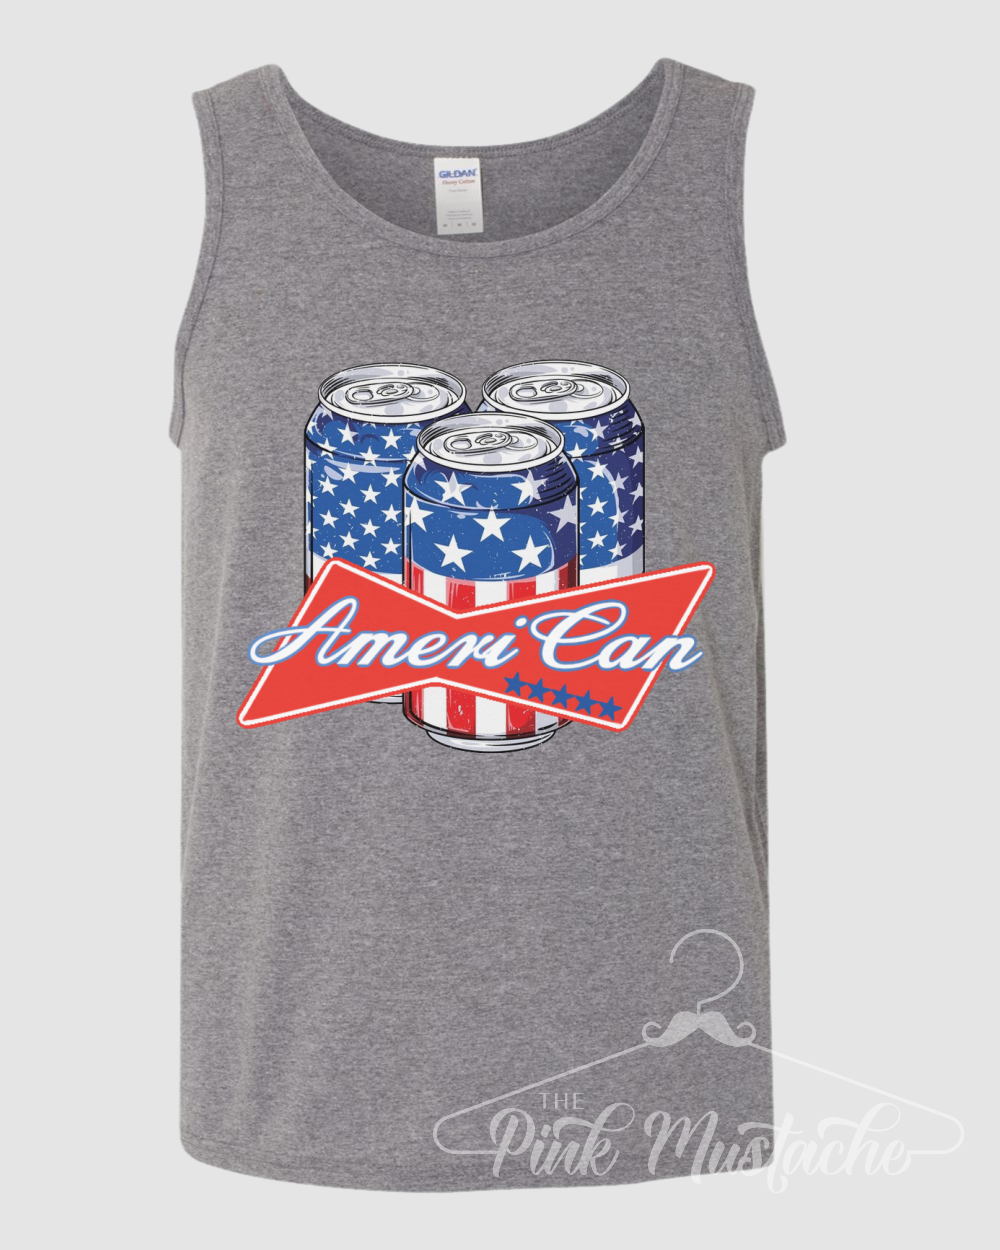 Unisex Ameri Can Funny Beer Tank / Memorial Day Tank Top / Beer Mullet / Men's Tees / USA July 4th shirt